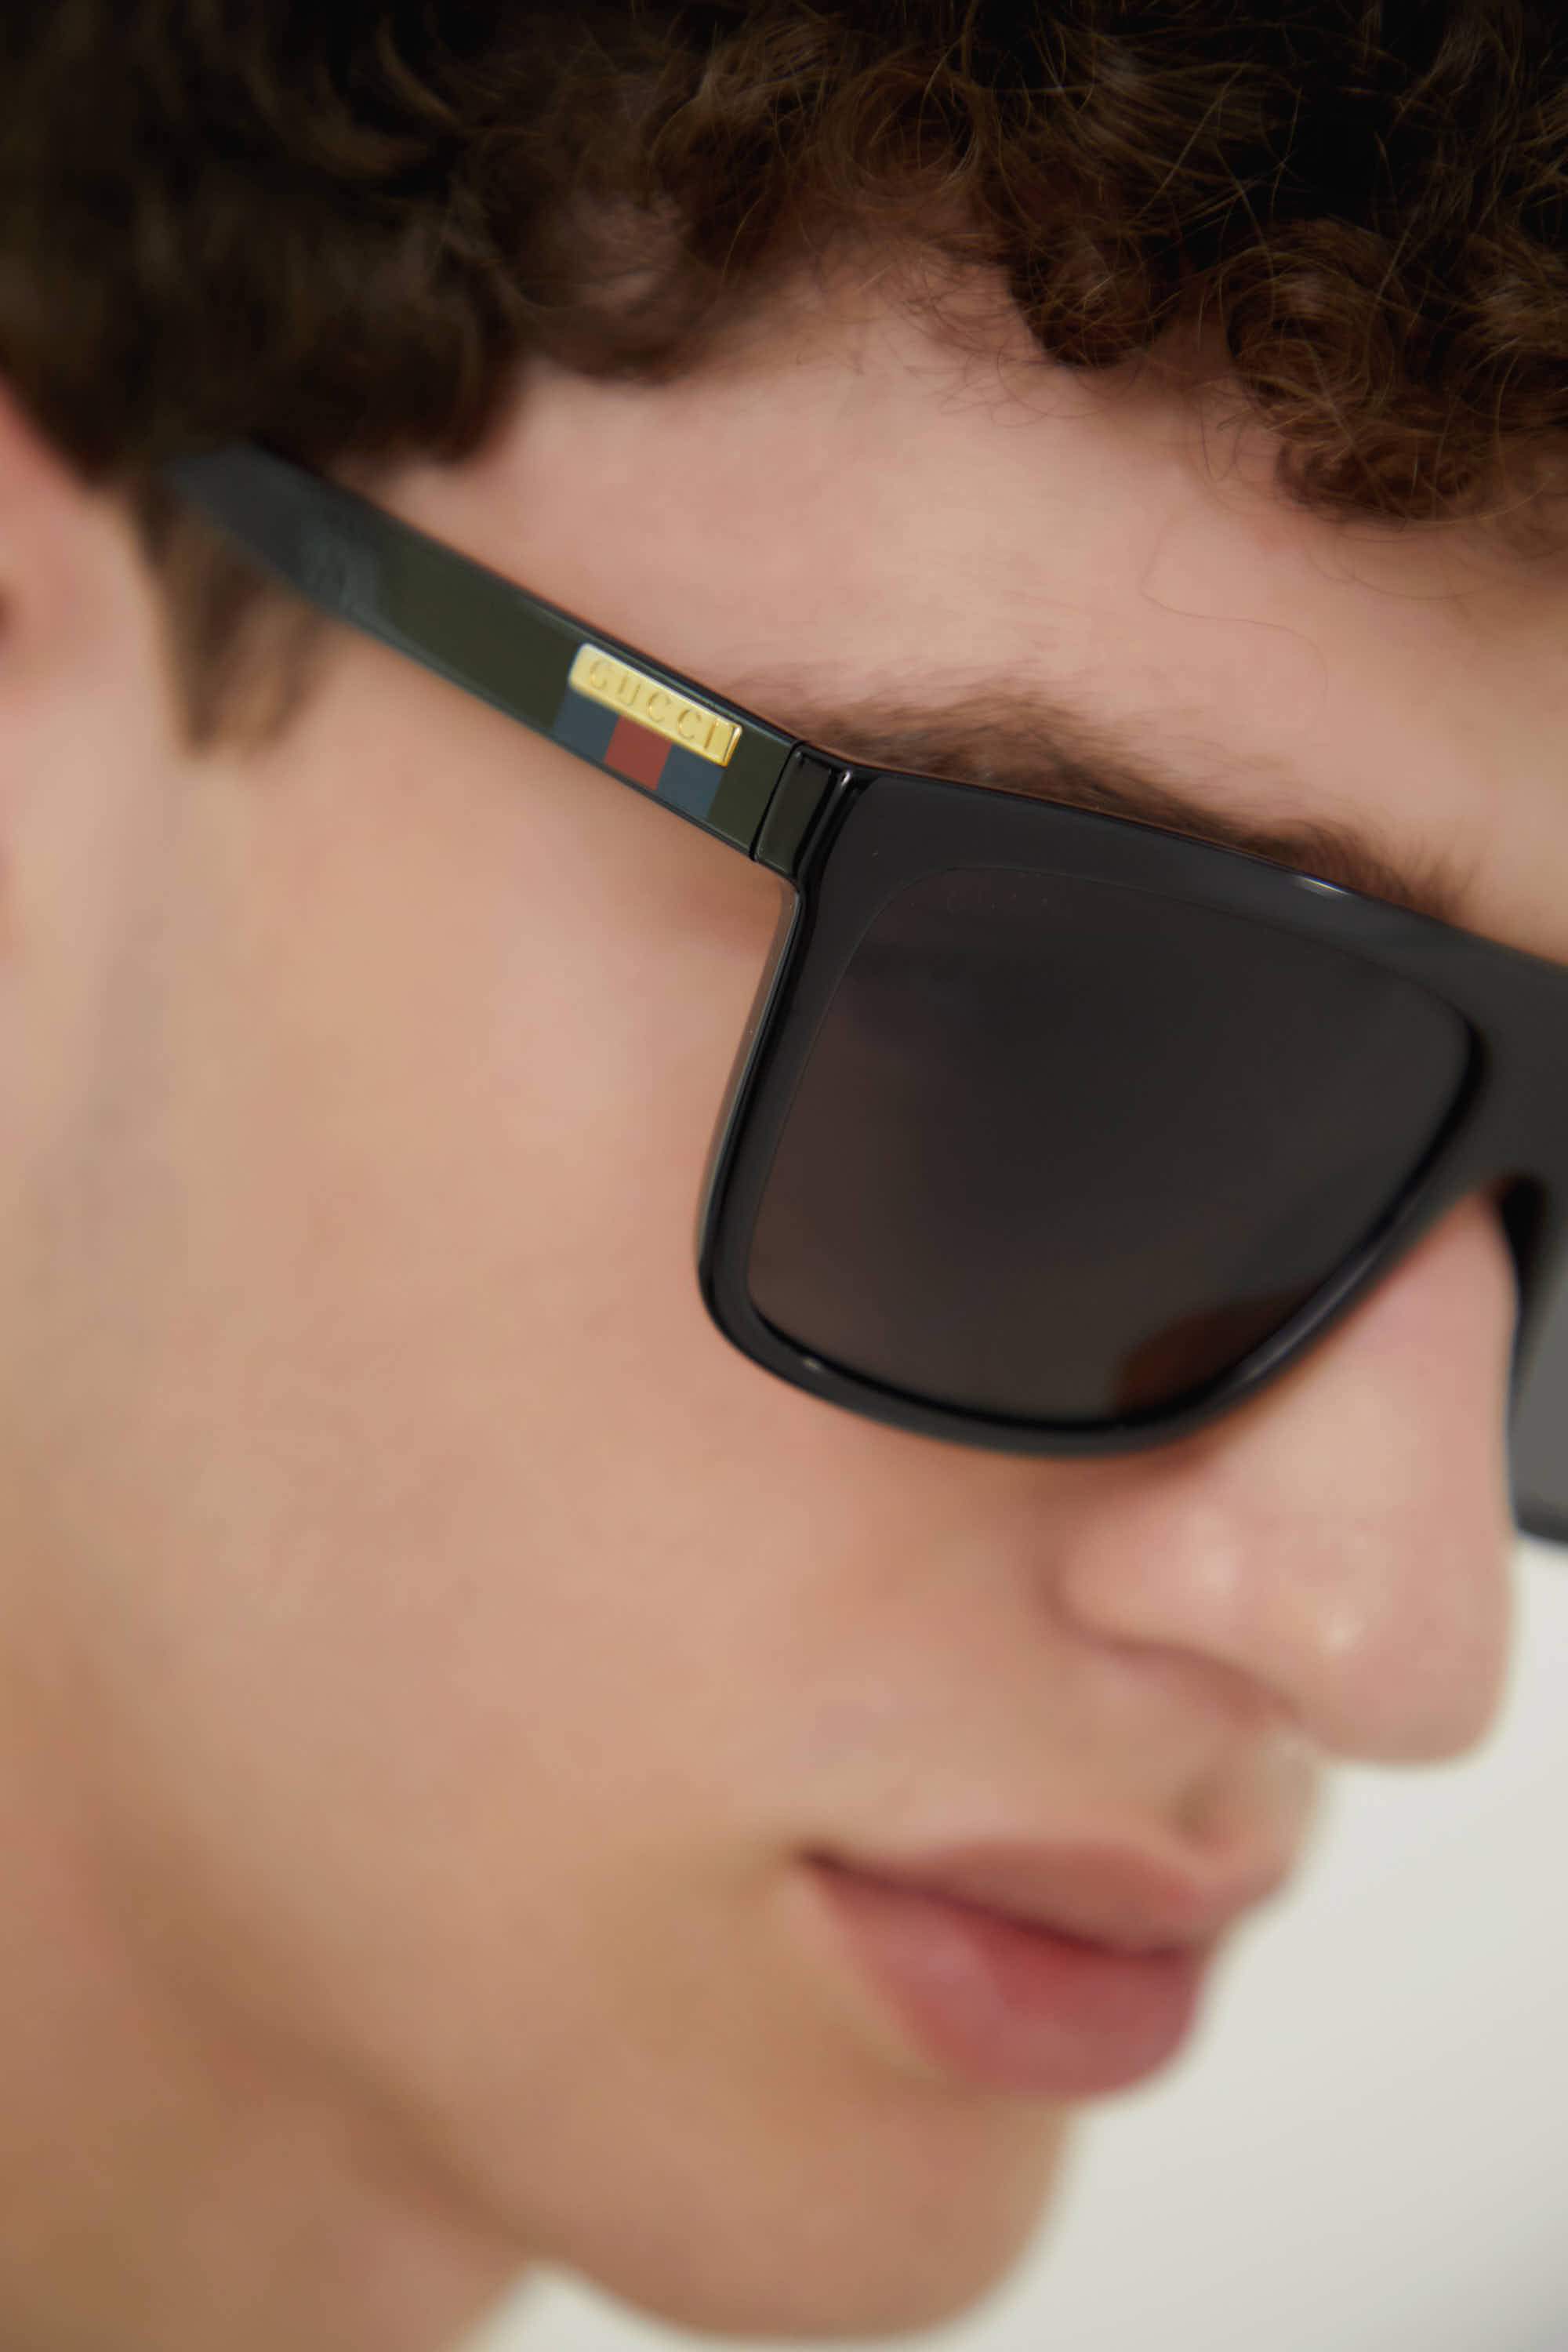 Gucci flat top squared masculine sunglasses - Eyewear Club